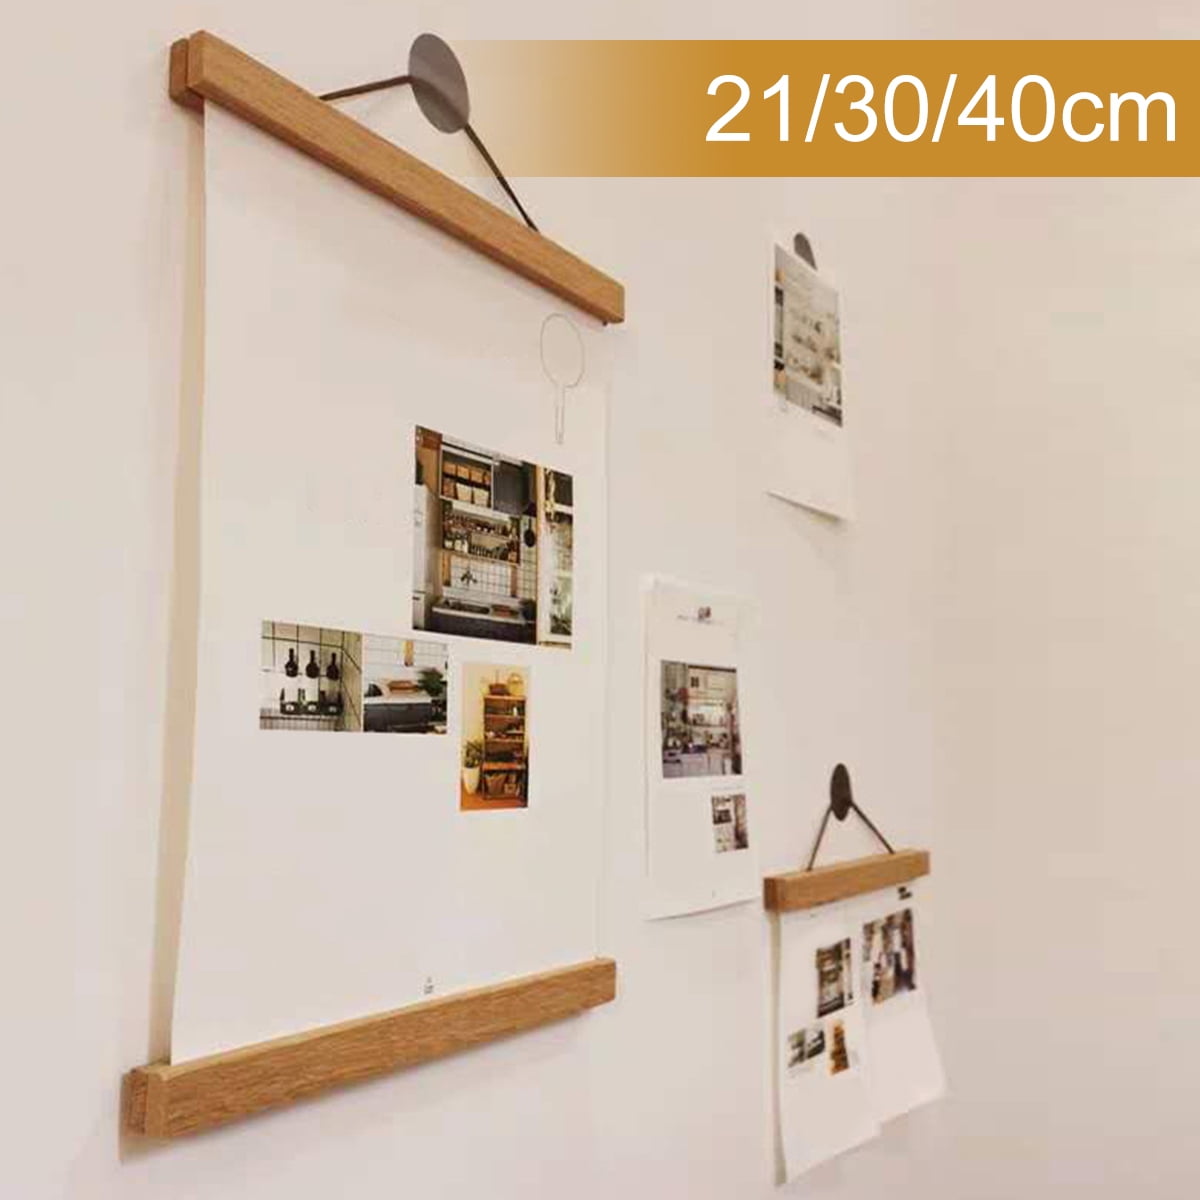 Pluokvzr Wood Magnetic Hanger 4Pcs Simple Teak Photo Hangers Kit with Hanging Rope for Photos Canvas Prints Artwork Home Dorm Interior Decor,40cm -